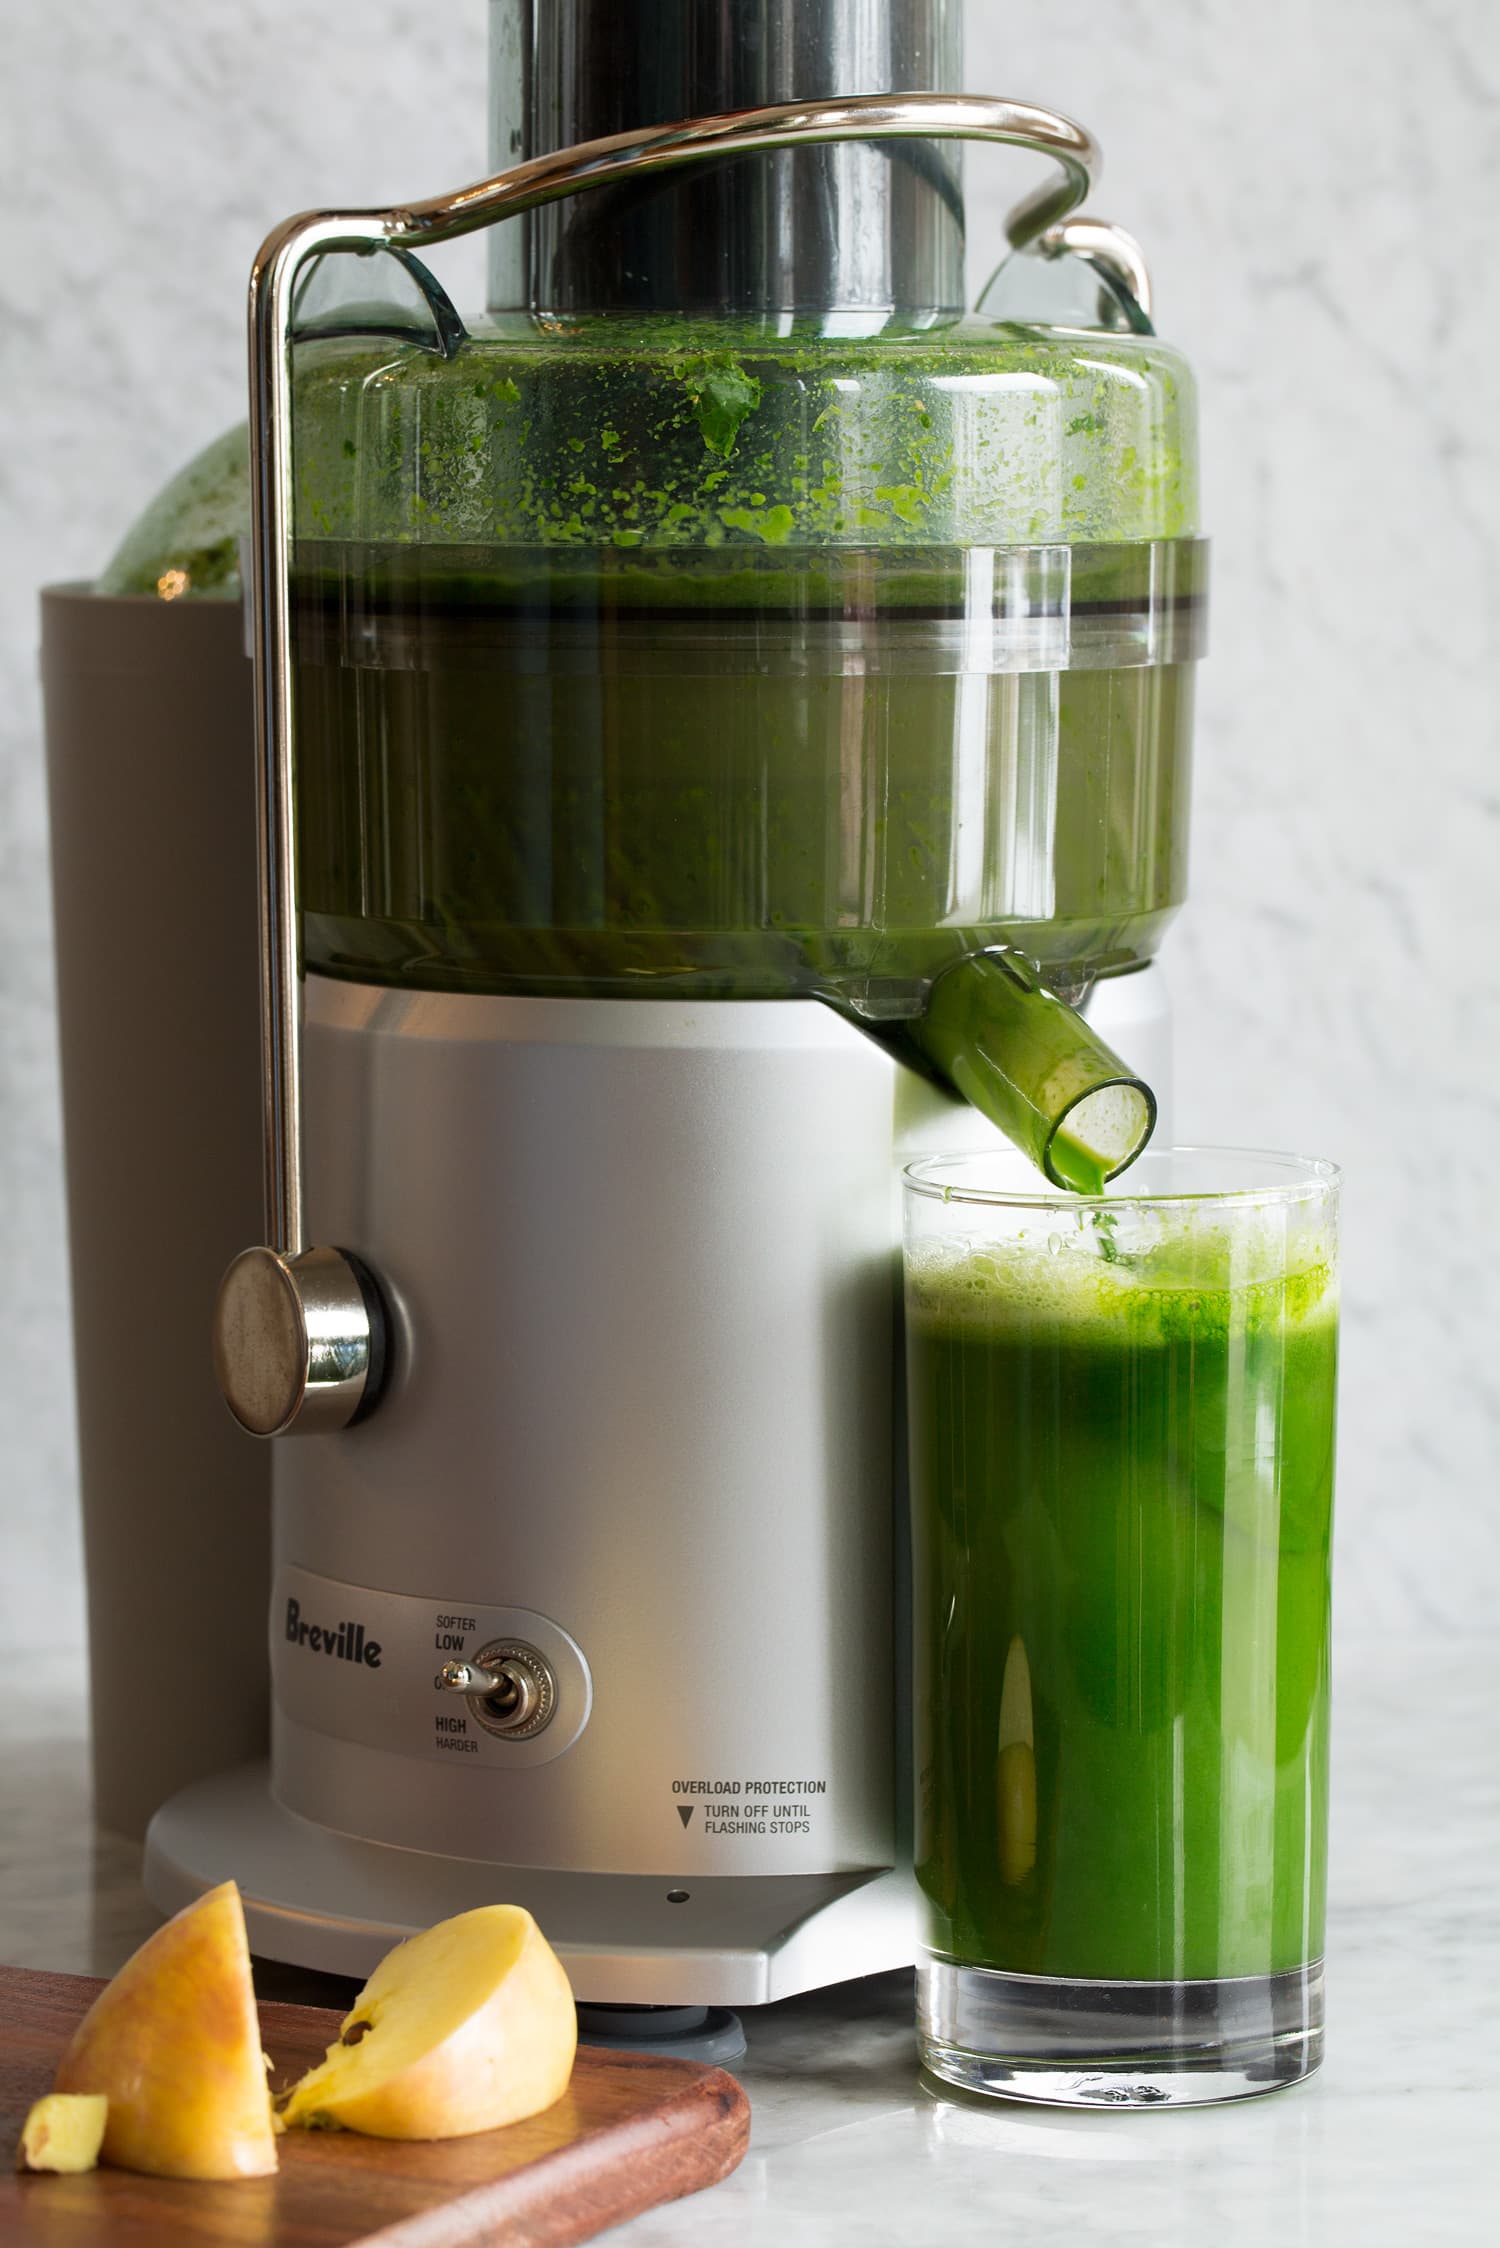 An electric juicer making green juice.